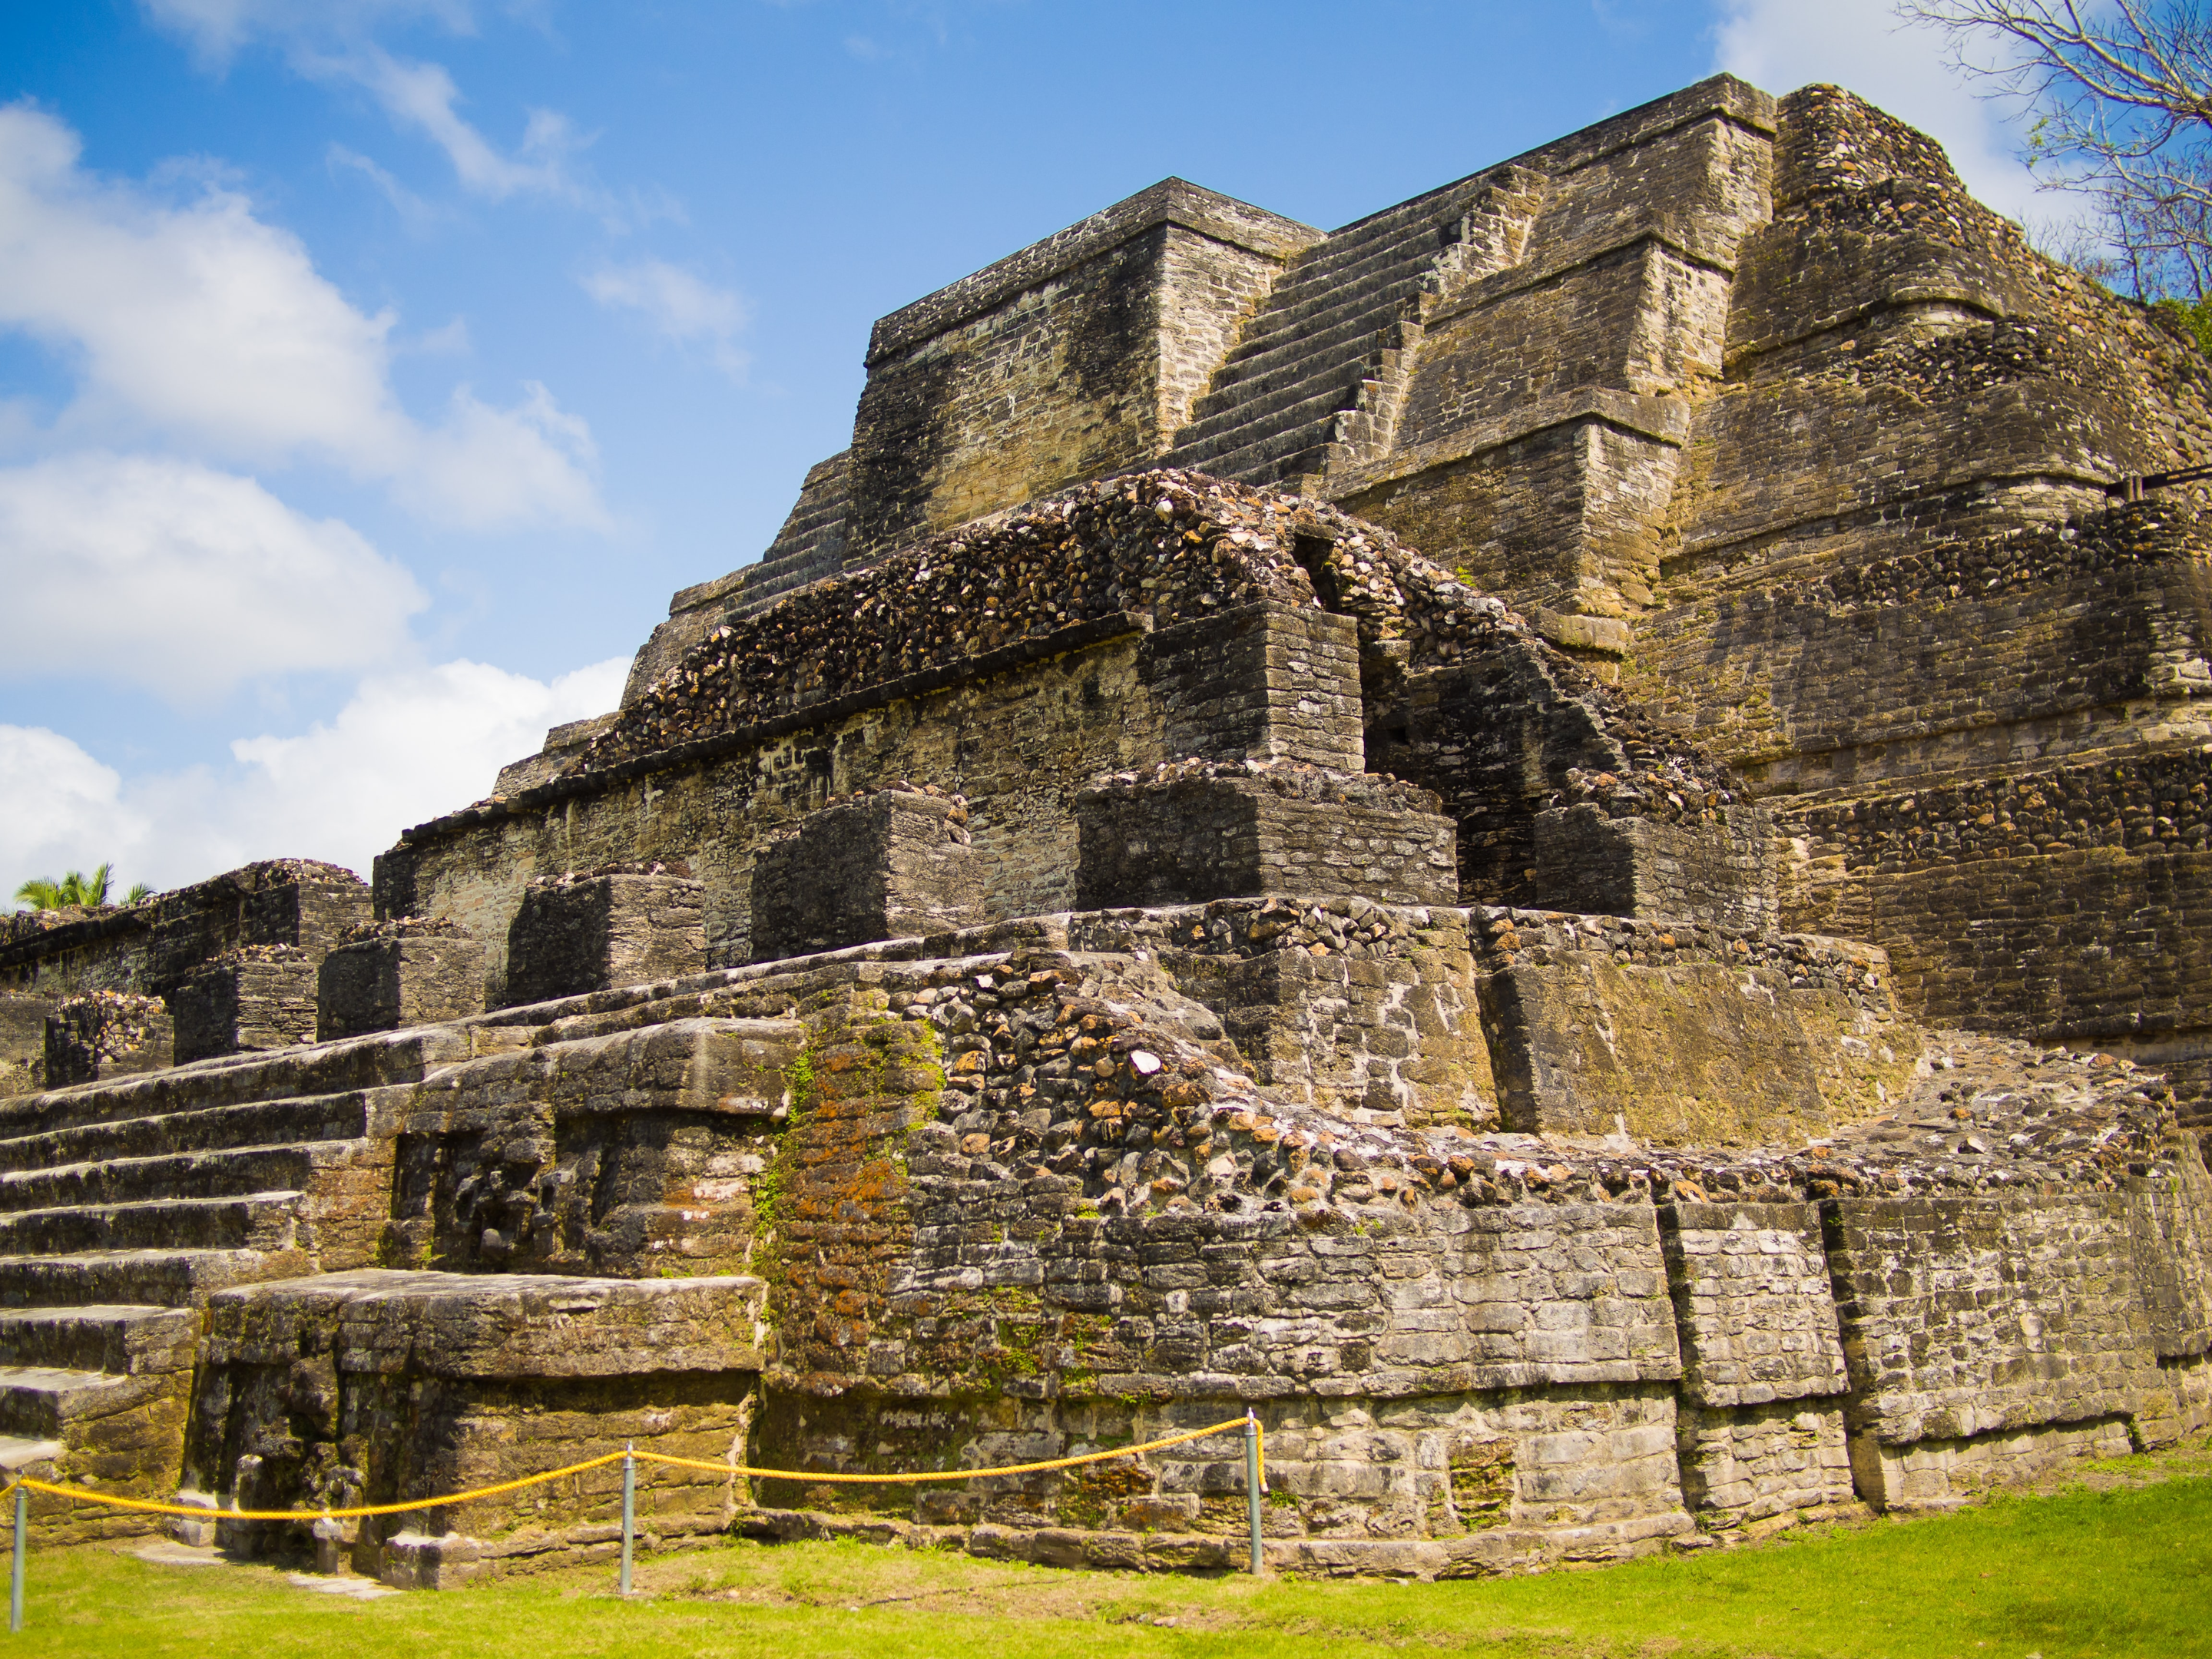 Mayan ruins in Belize City